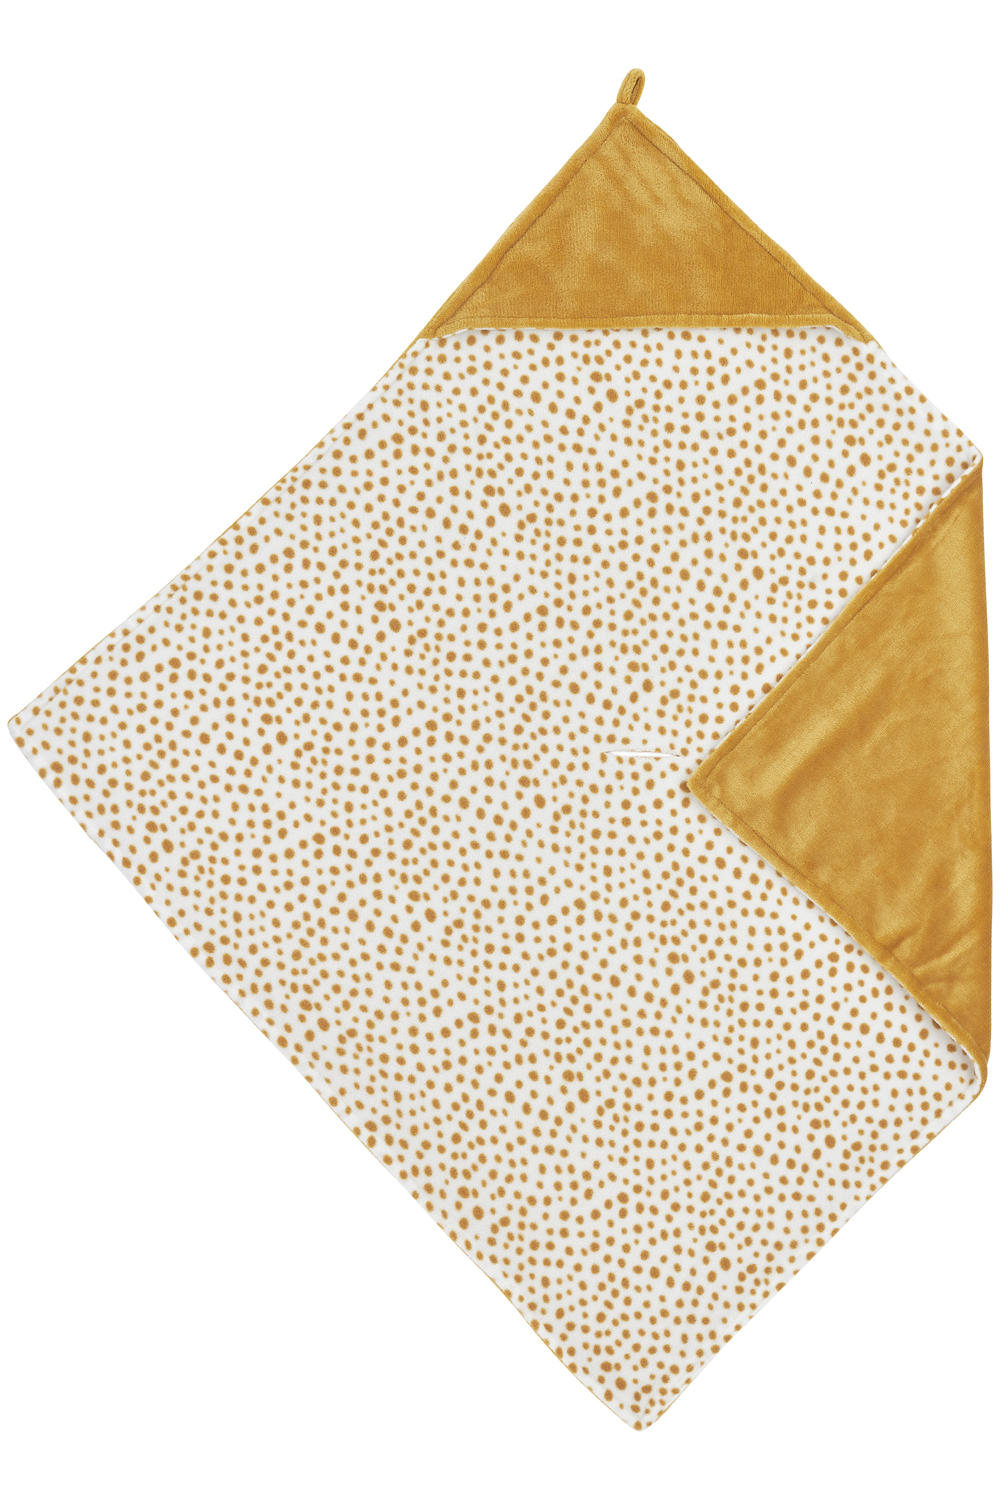 Badcape fleece Cheetah - honey gold - 80x80cm